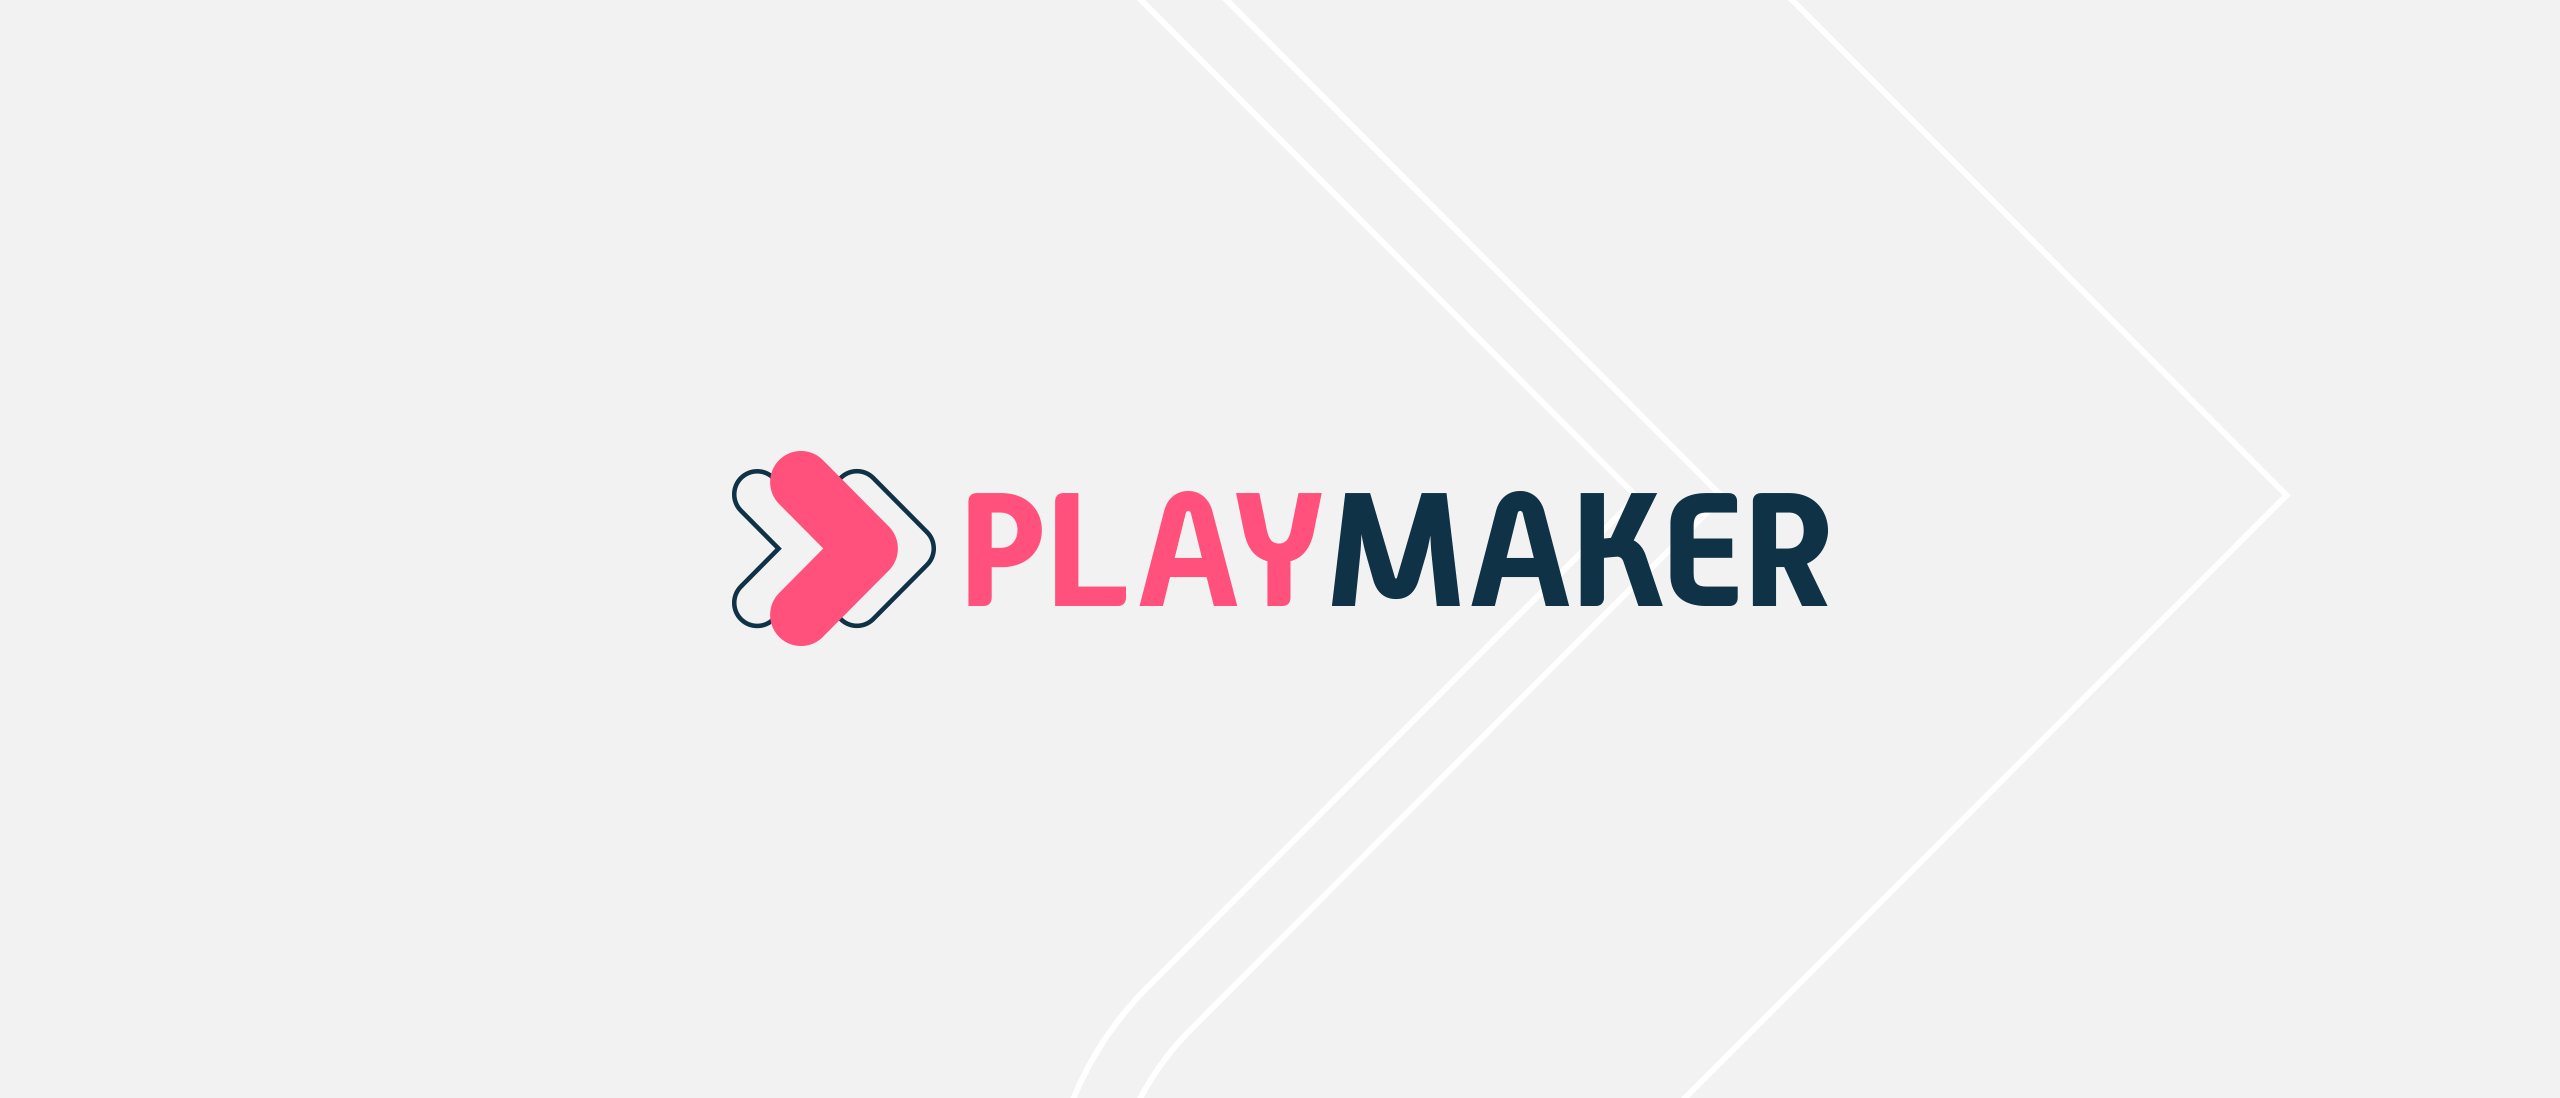 Play Maker Logo